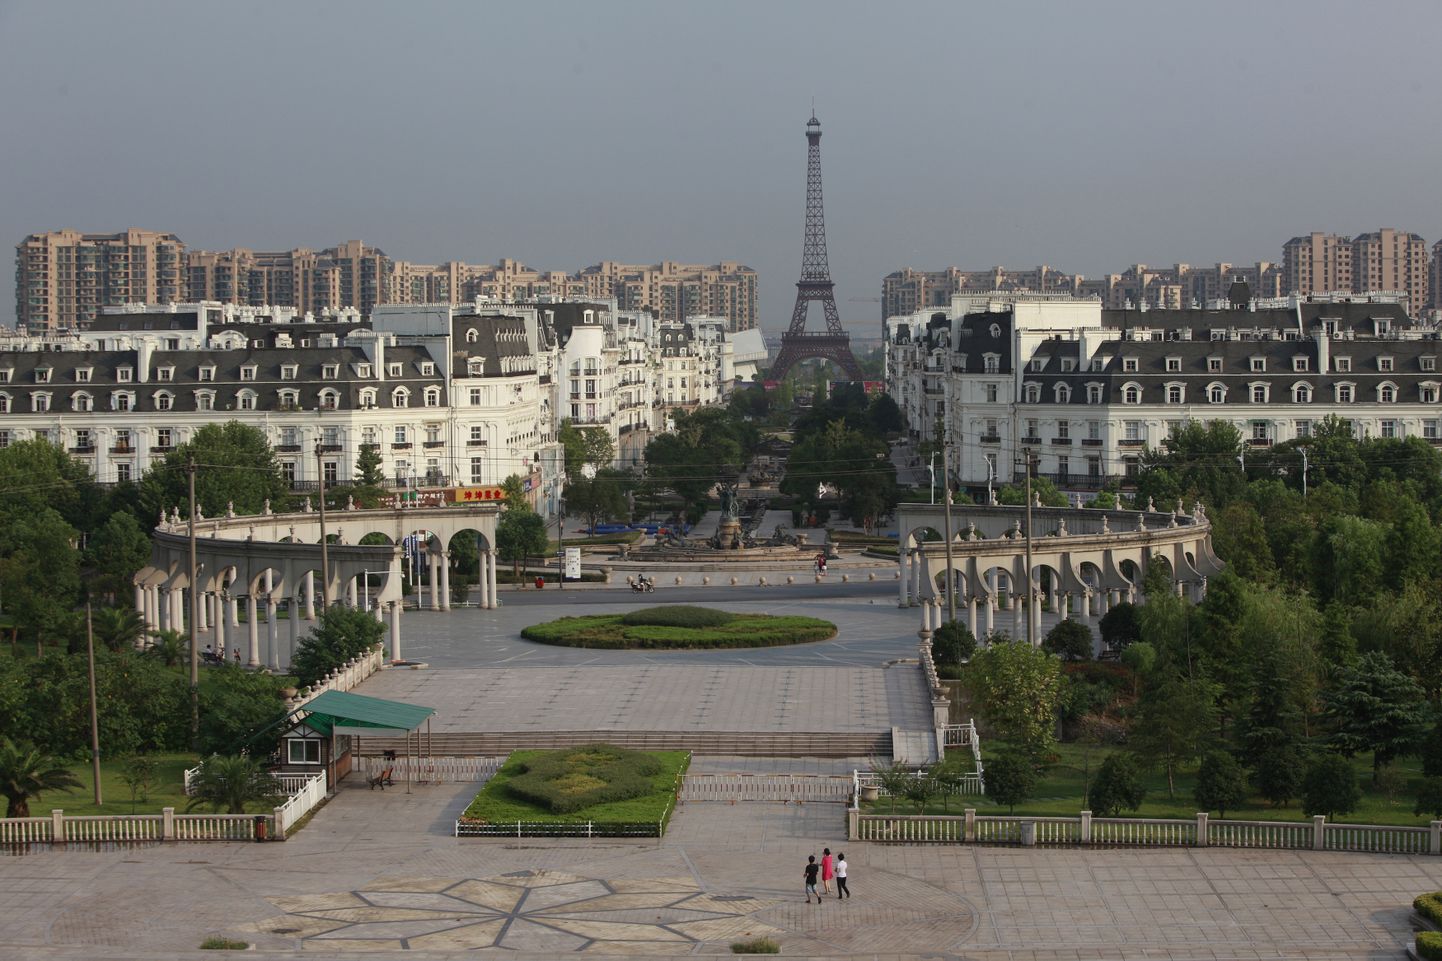 Hiina Zhejiangi provintsi Hangzhou uus Tianduchengi linnaosa, kus on ka Pariisi Eiffeli torni koopia